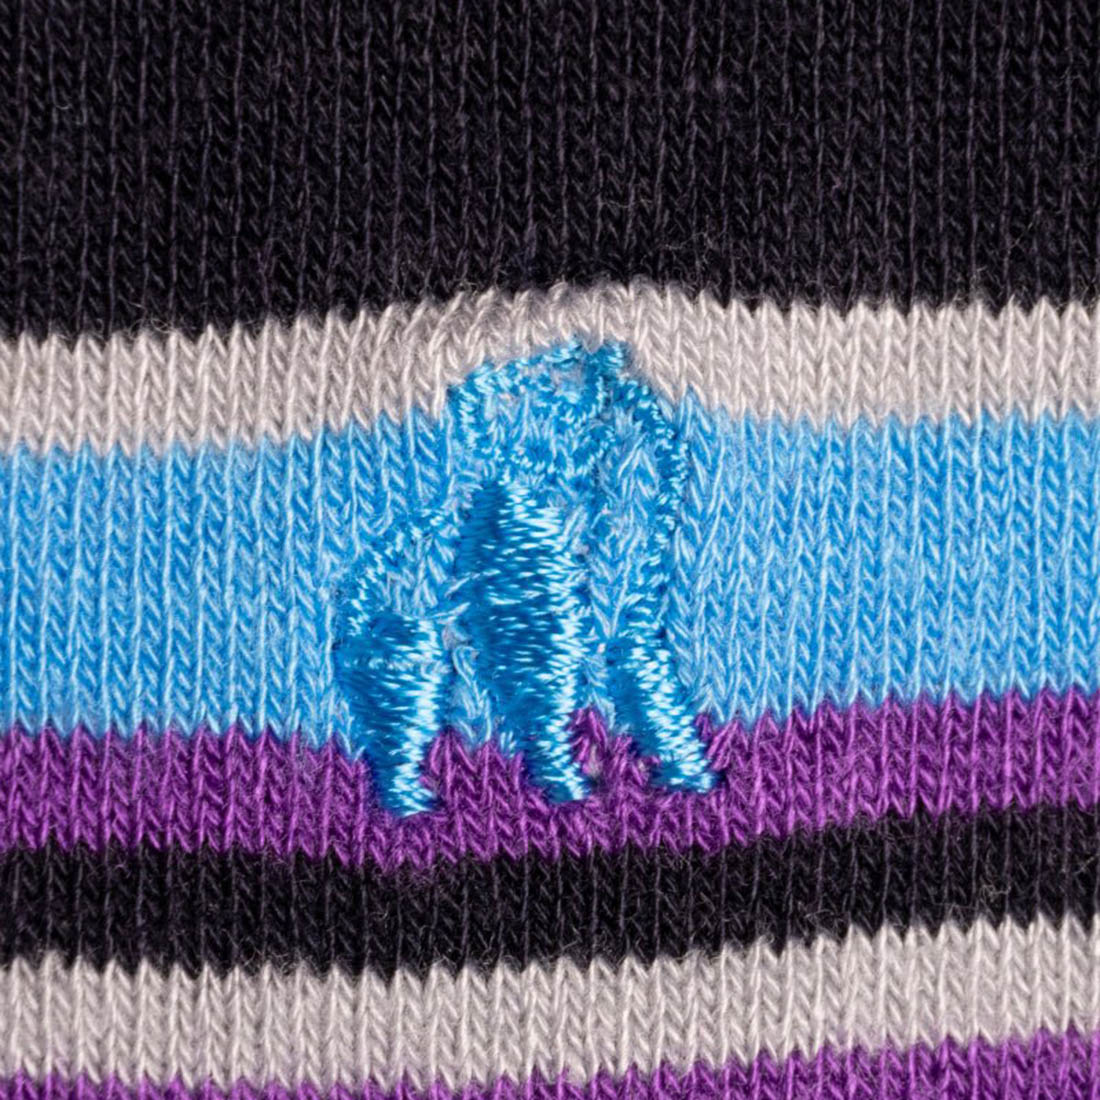 socks-purple-and-blue-striped-bamboo-socks-3_762158df-d89a-4cd1-87a3-3d021ab24011.jpg